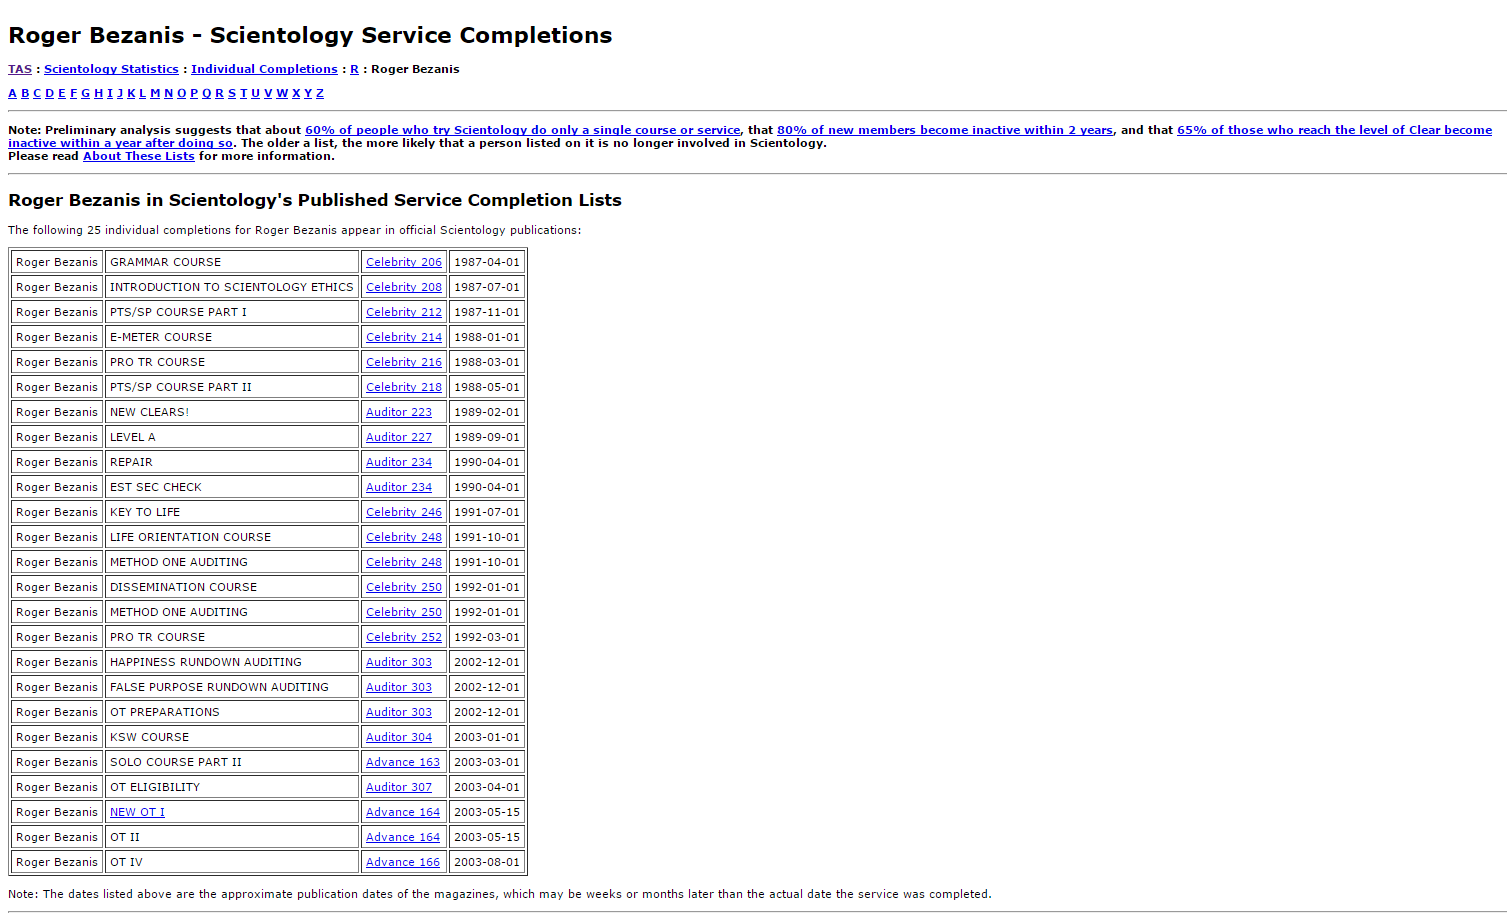 Scientology Service Completions List